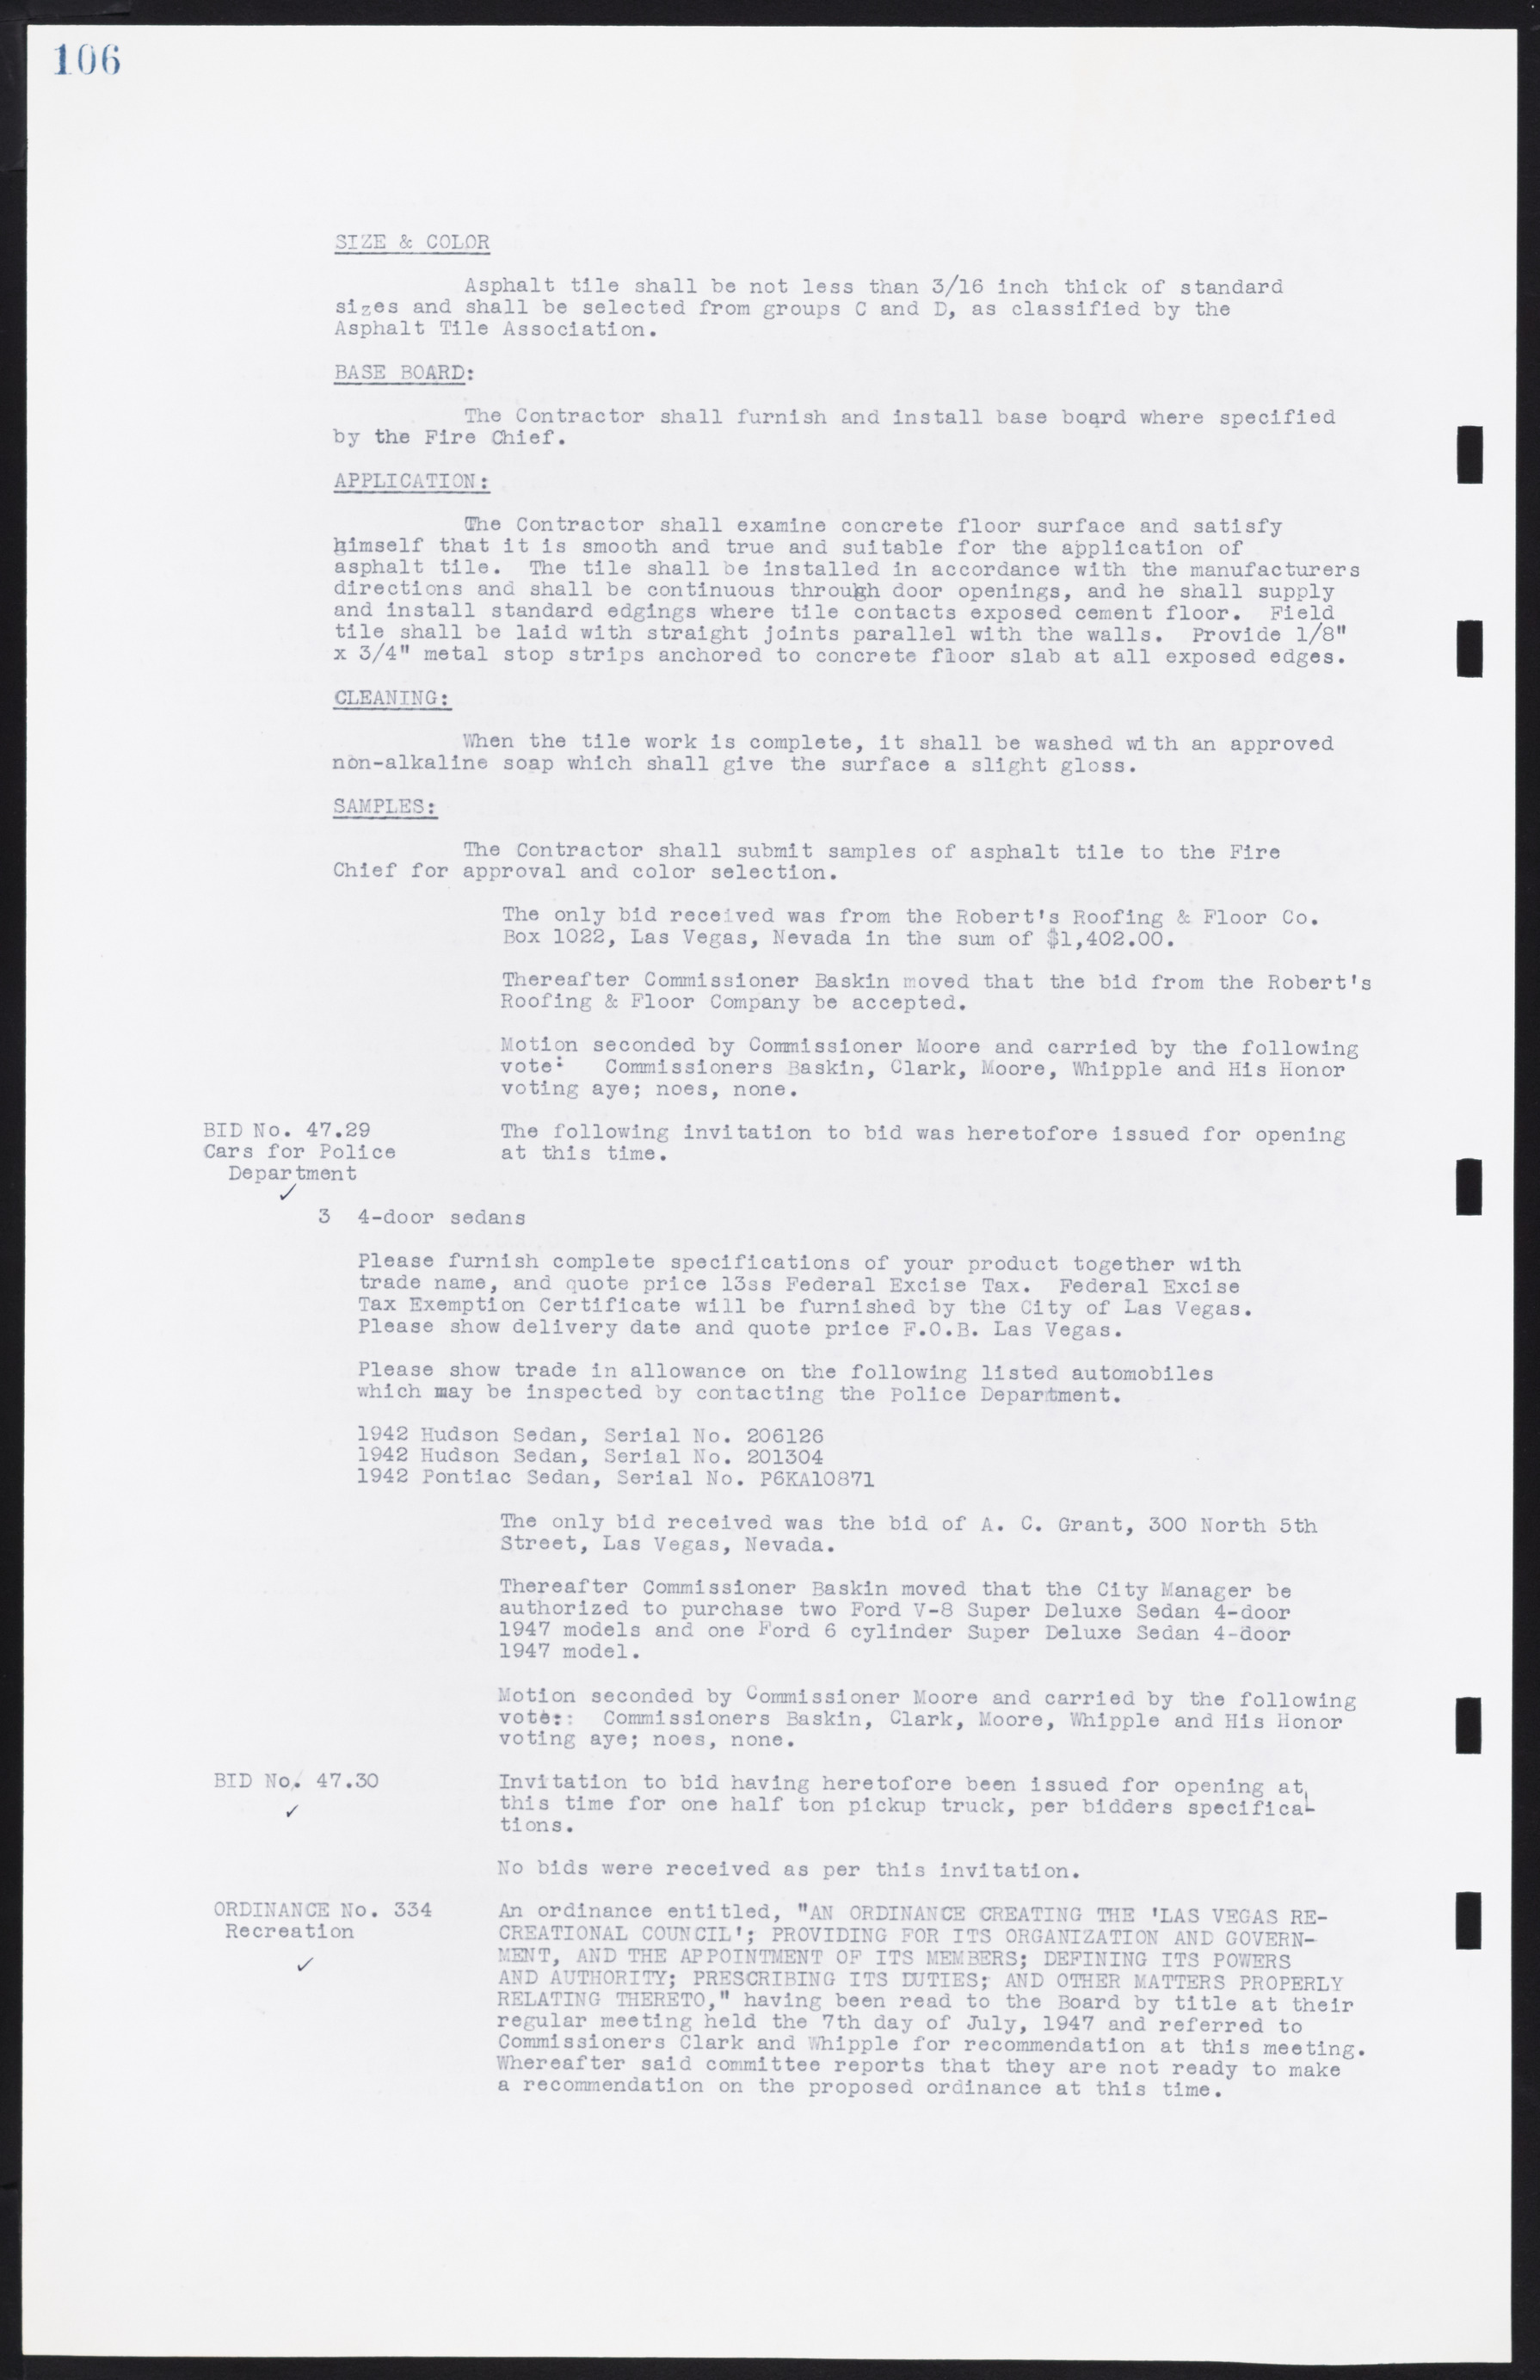 Las Vegas City Commission Minutes, January 7, 1947 to October 26, 1949, lvc000006-124